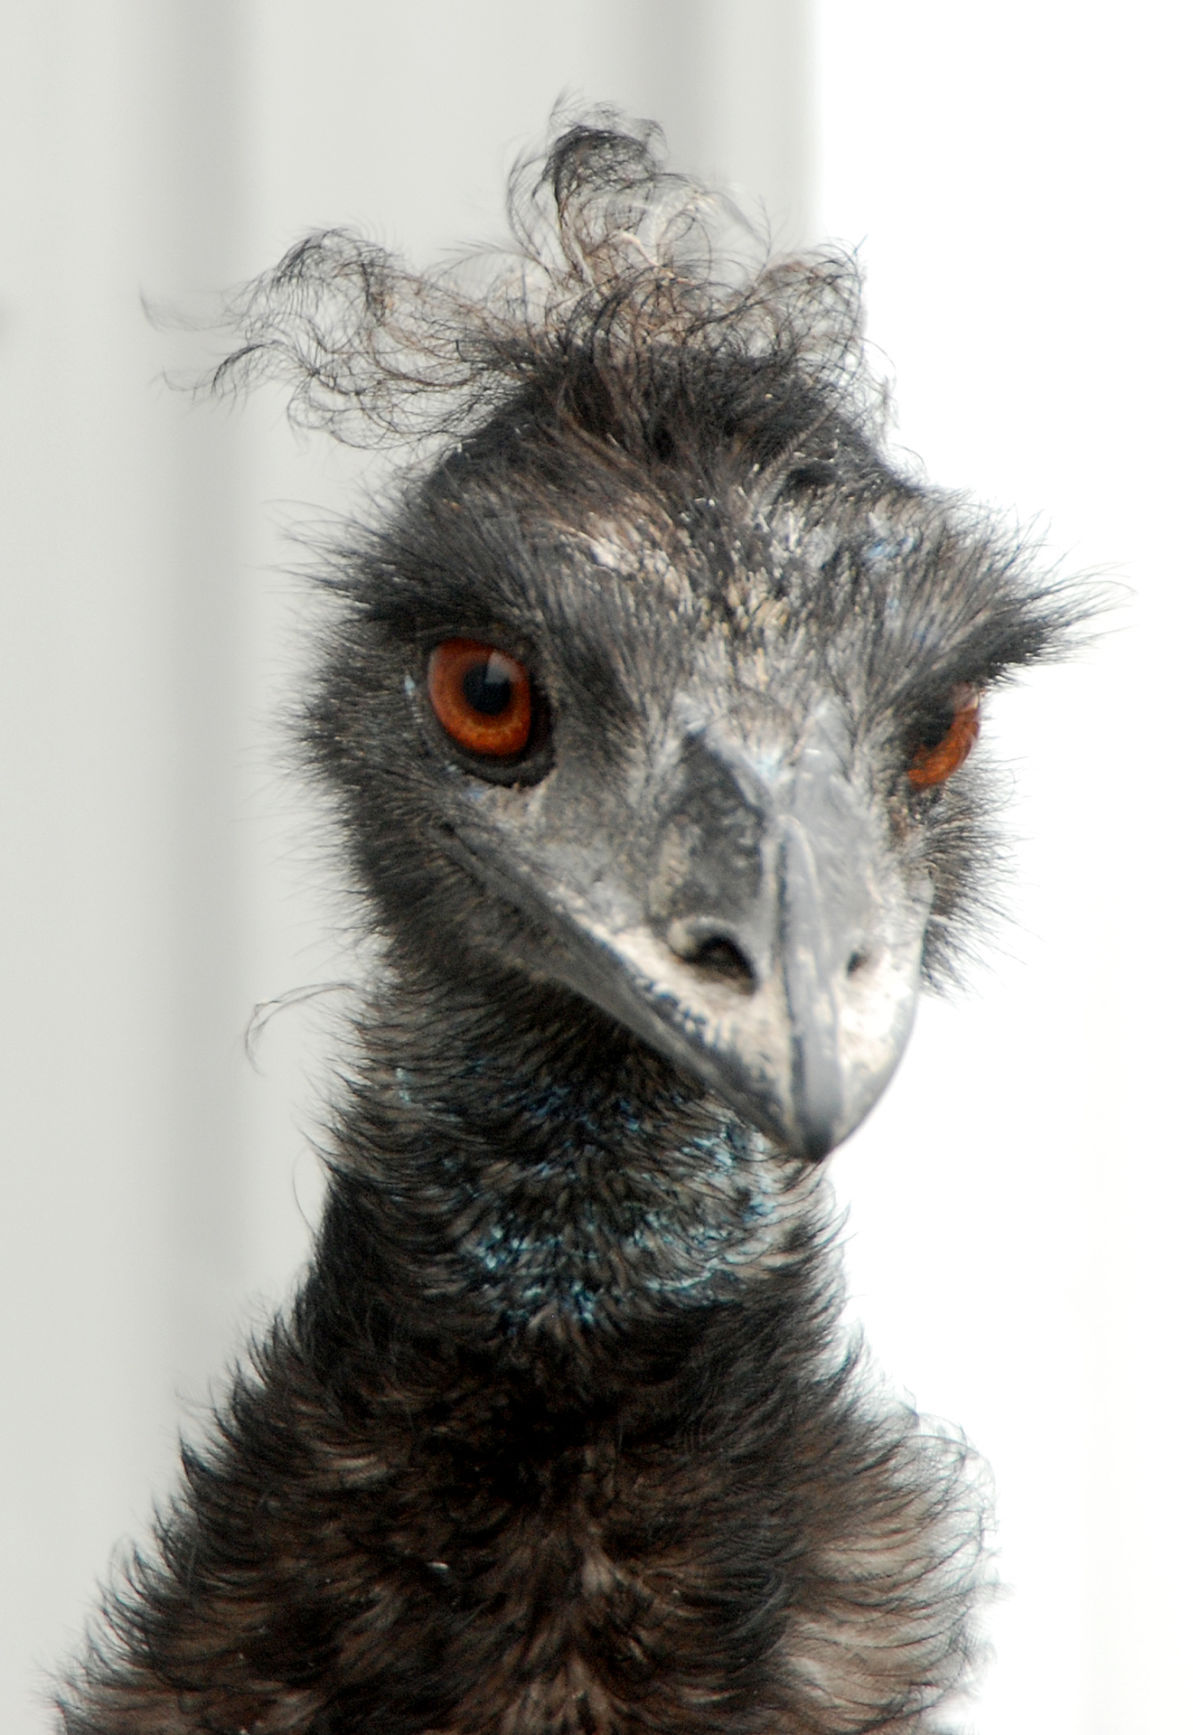 Emu still evading capture | Local | swnewsmedia.com